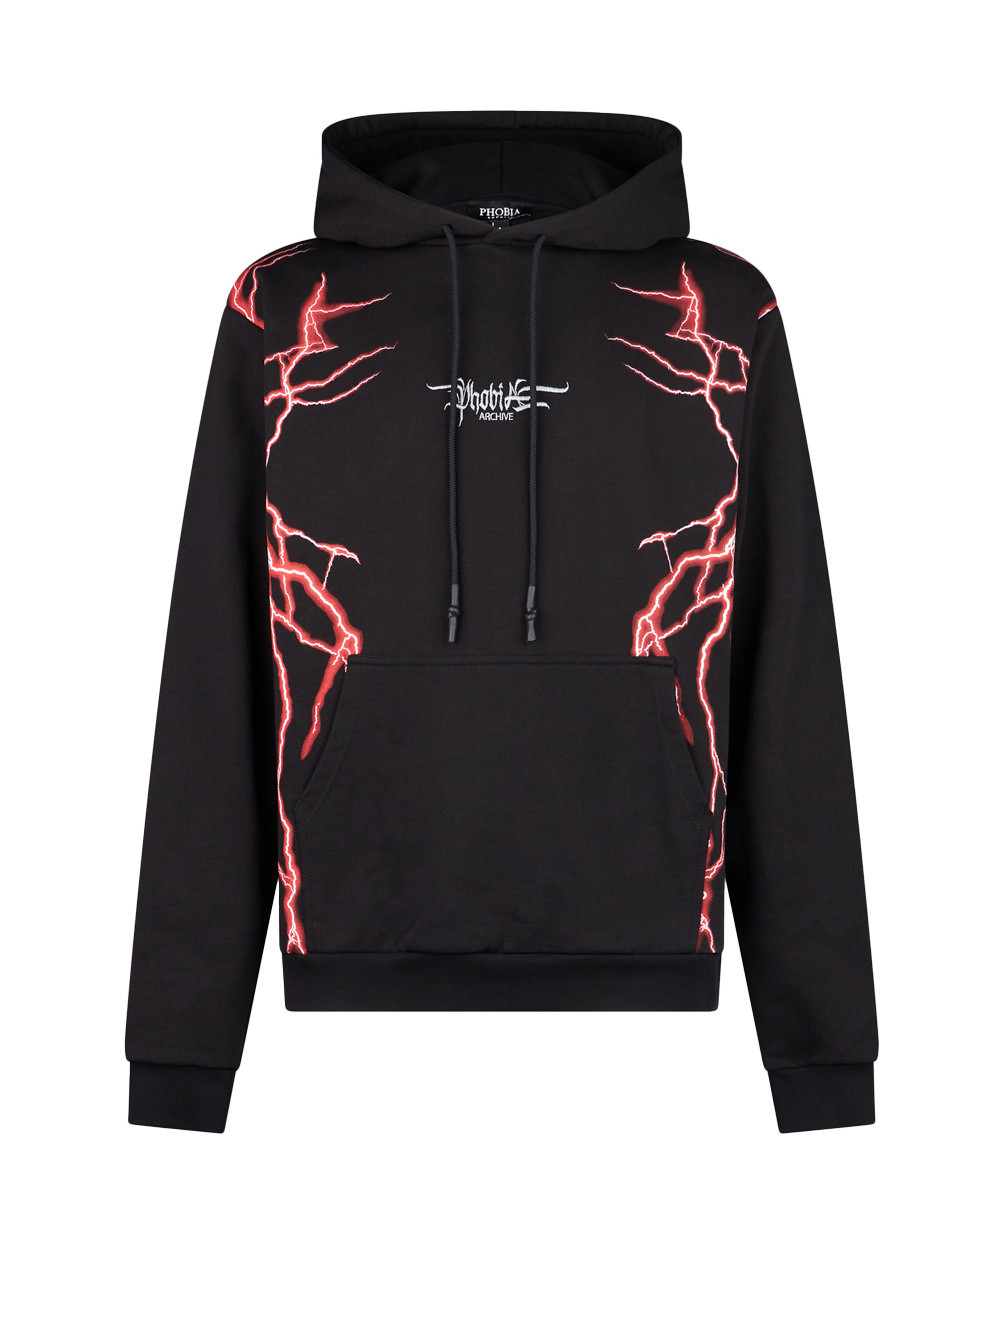 Phobia - Cotton sweatshirt with lightning print, Black, large image number 0